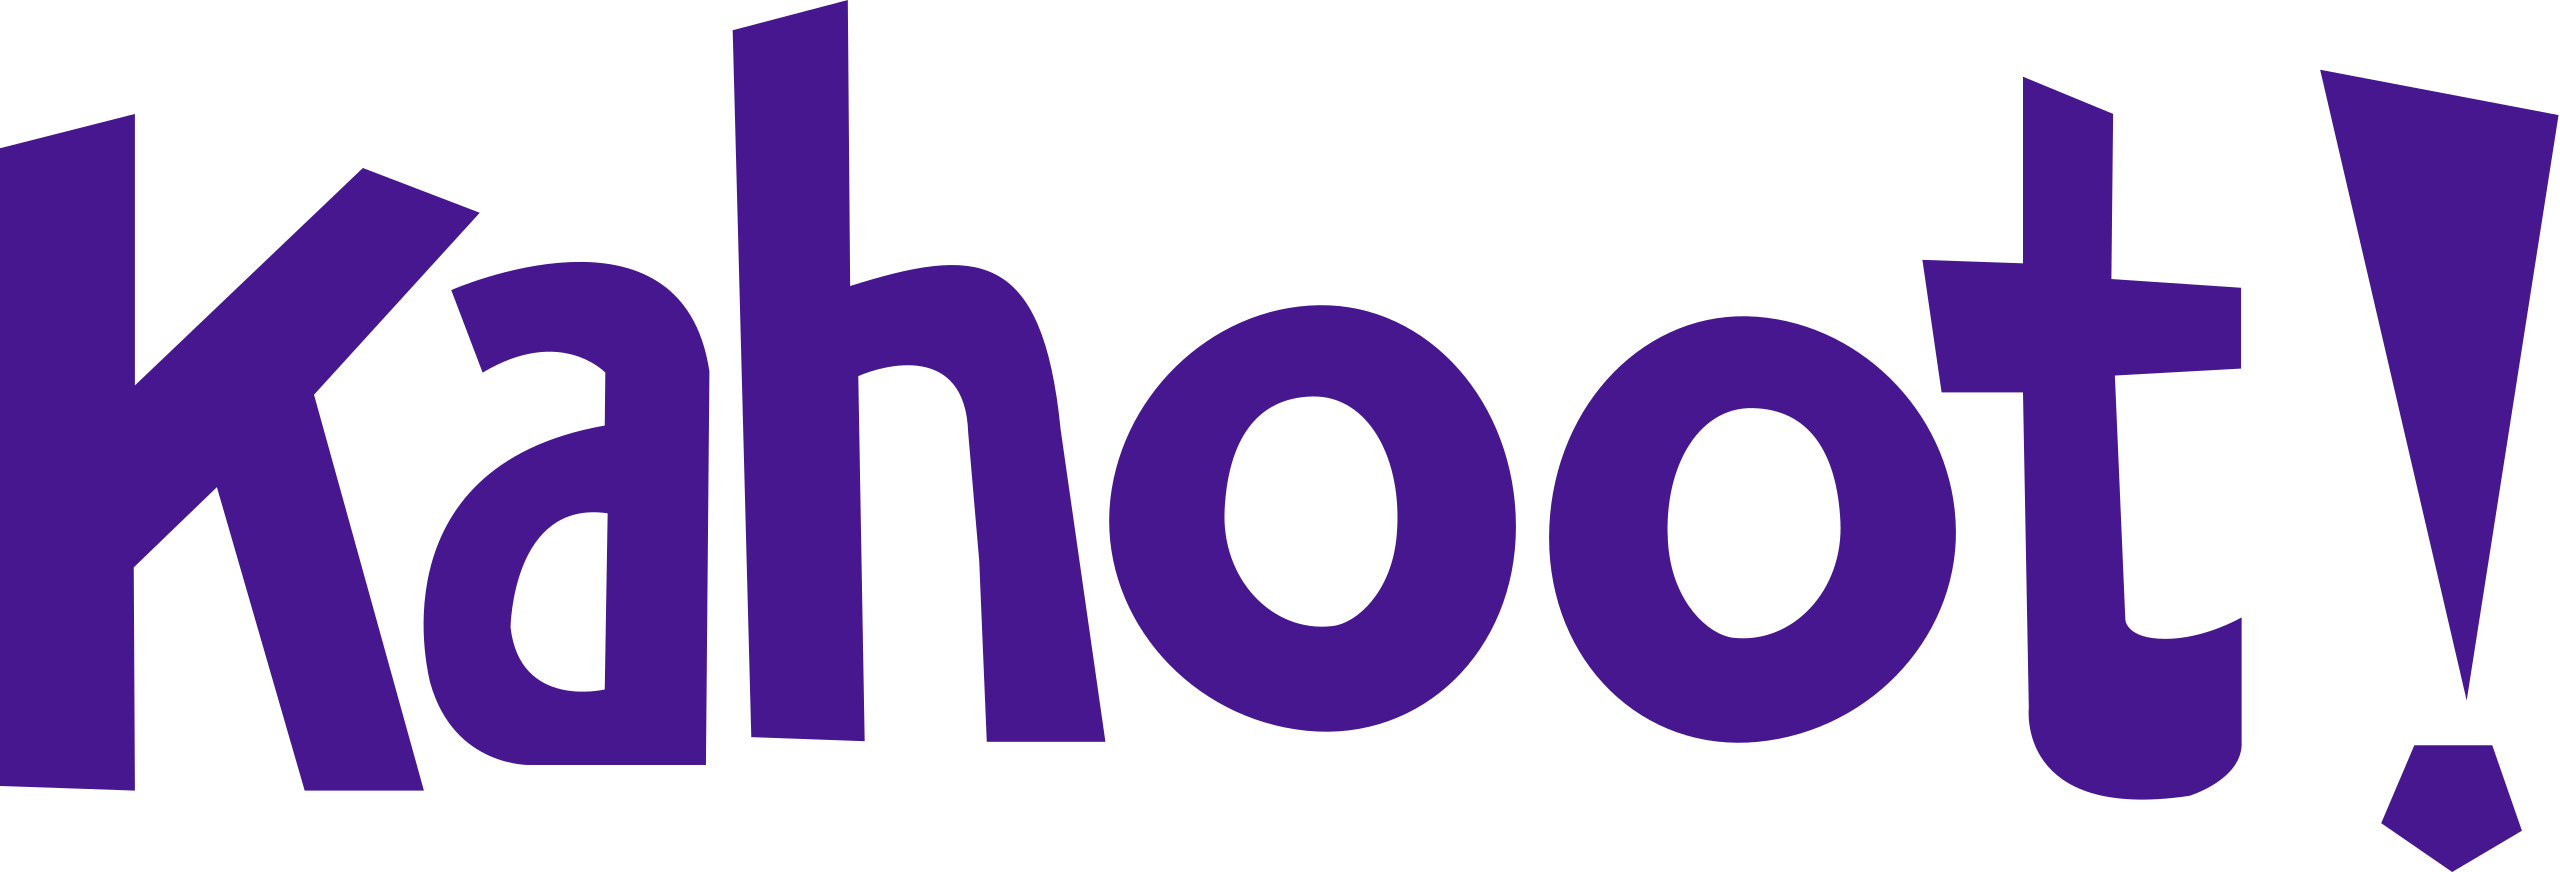 Kahoot_Logo.svg